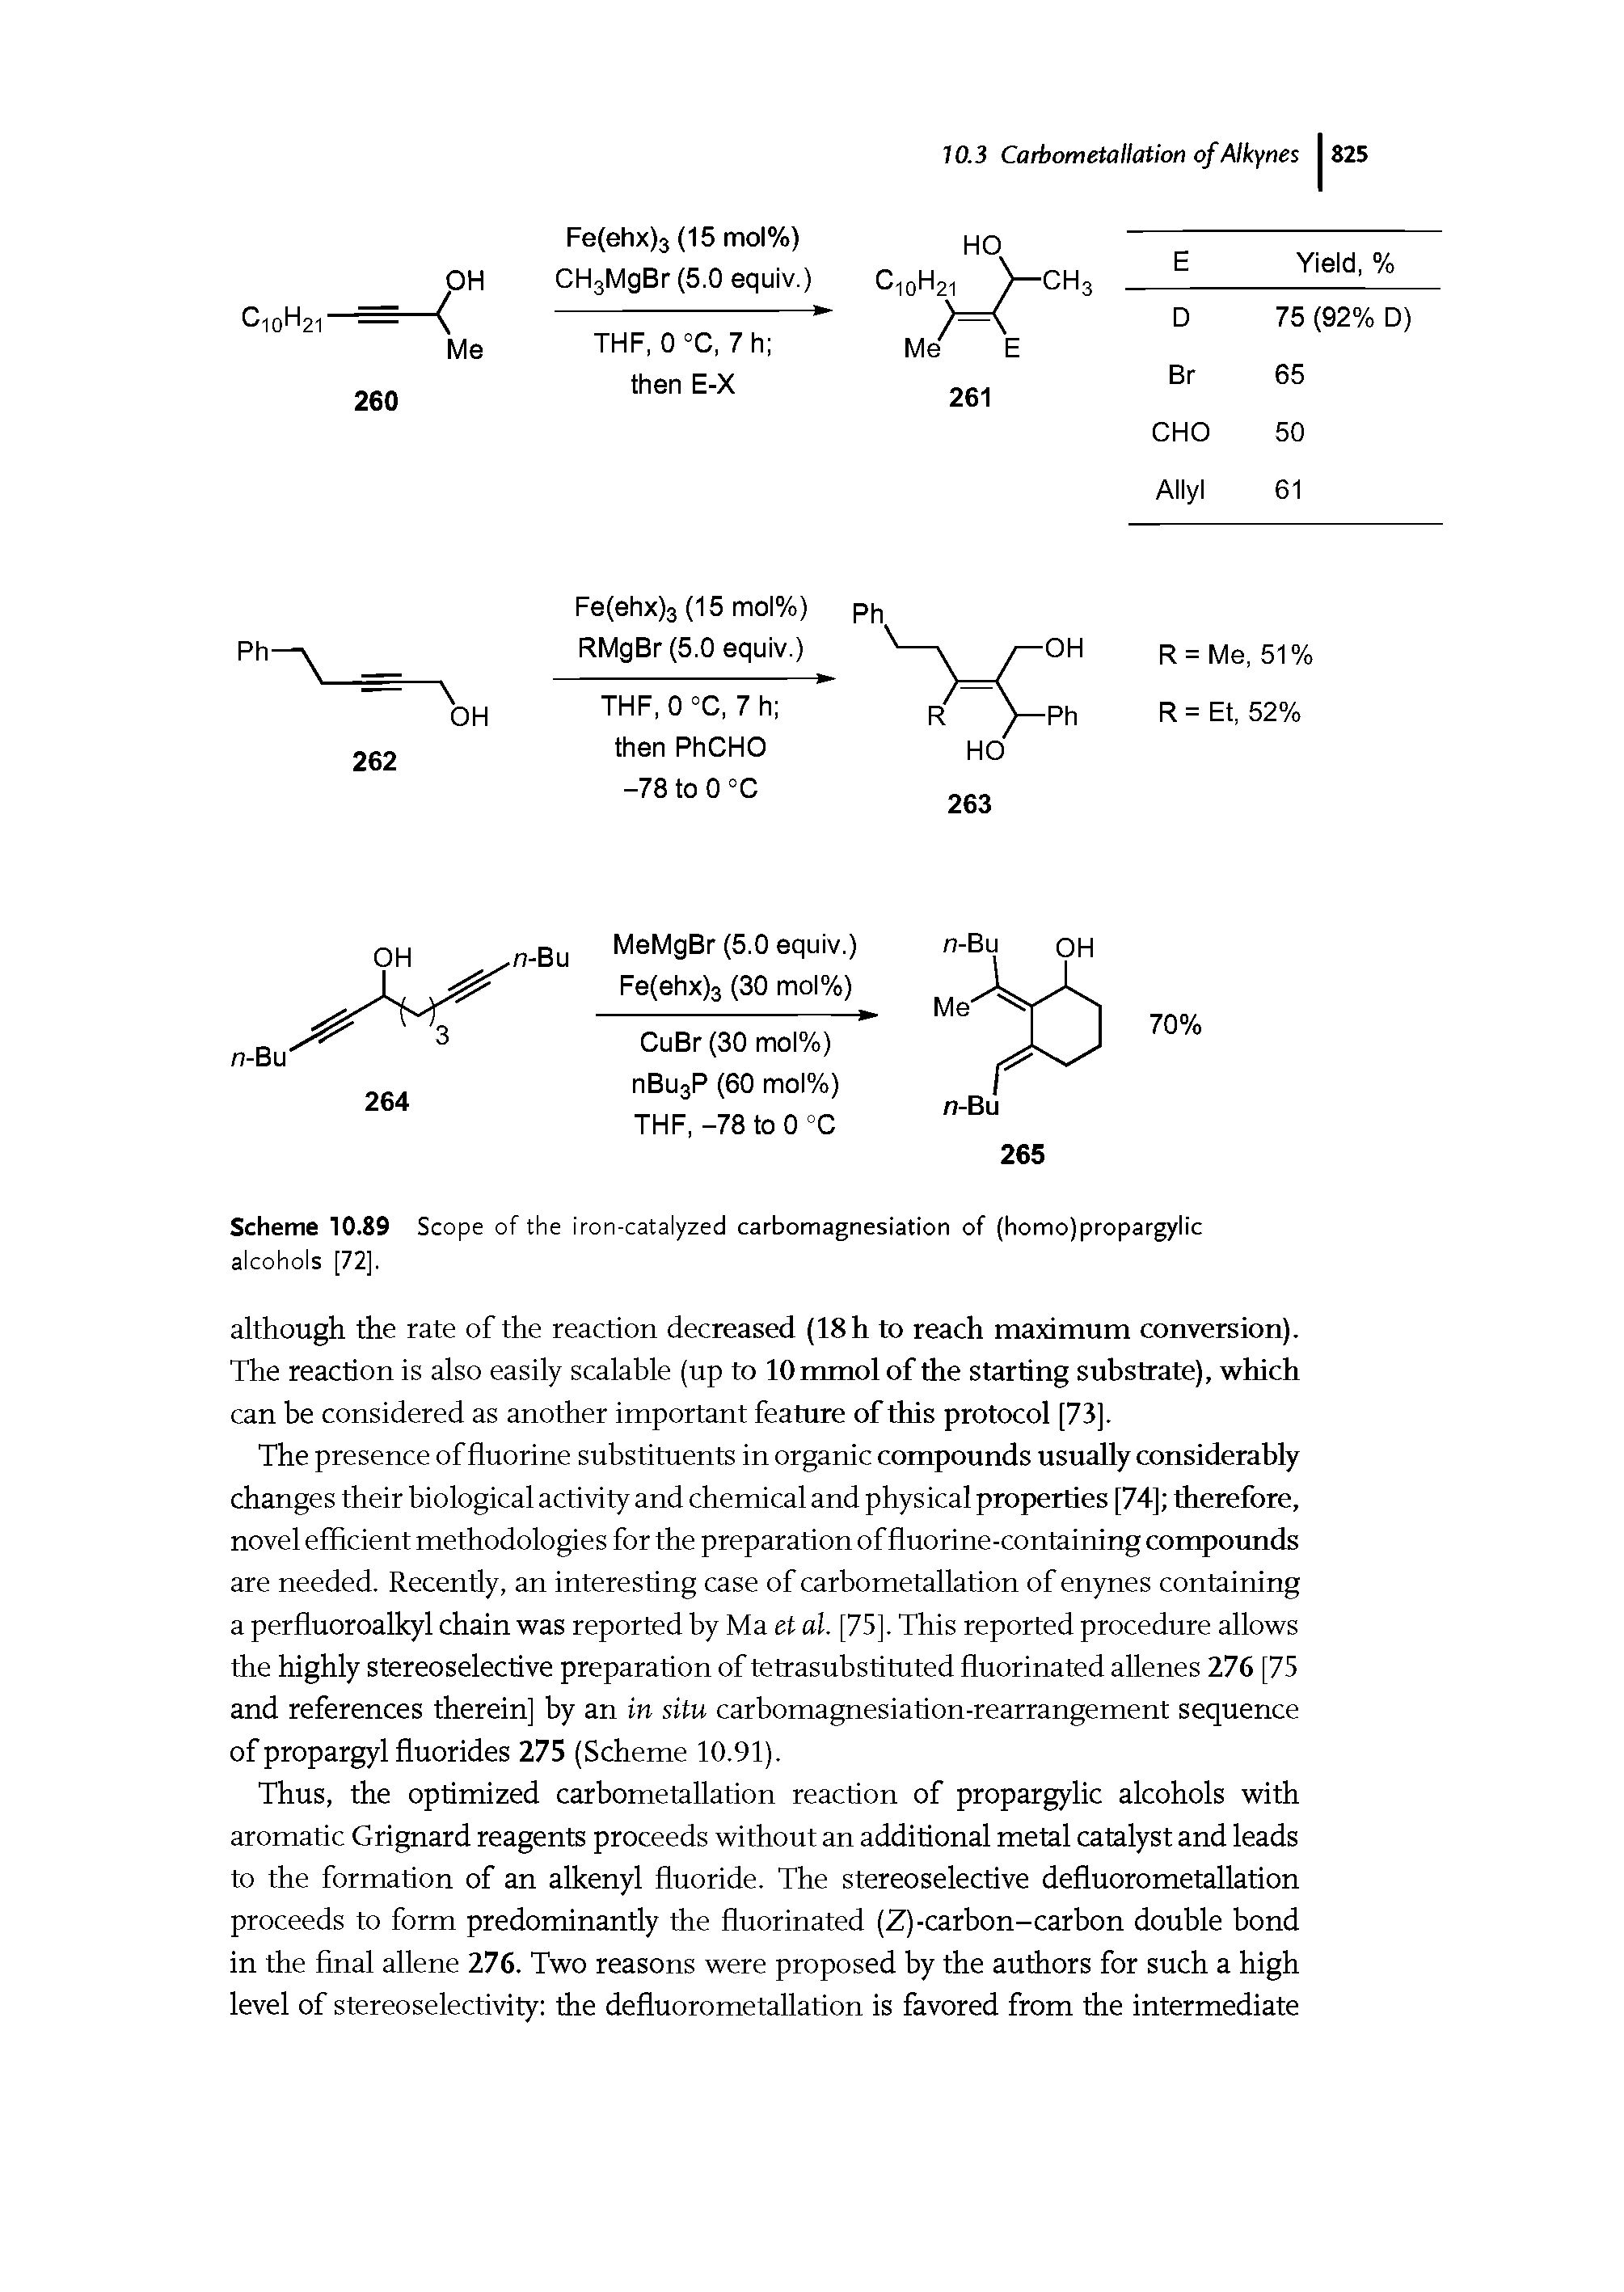 Scheme 10.89 Scope of the iron-catalyzed carbomagnesiation of (homo)propargylic alcohols [72].